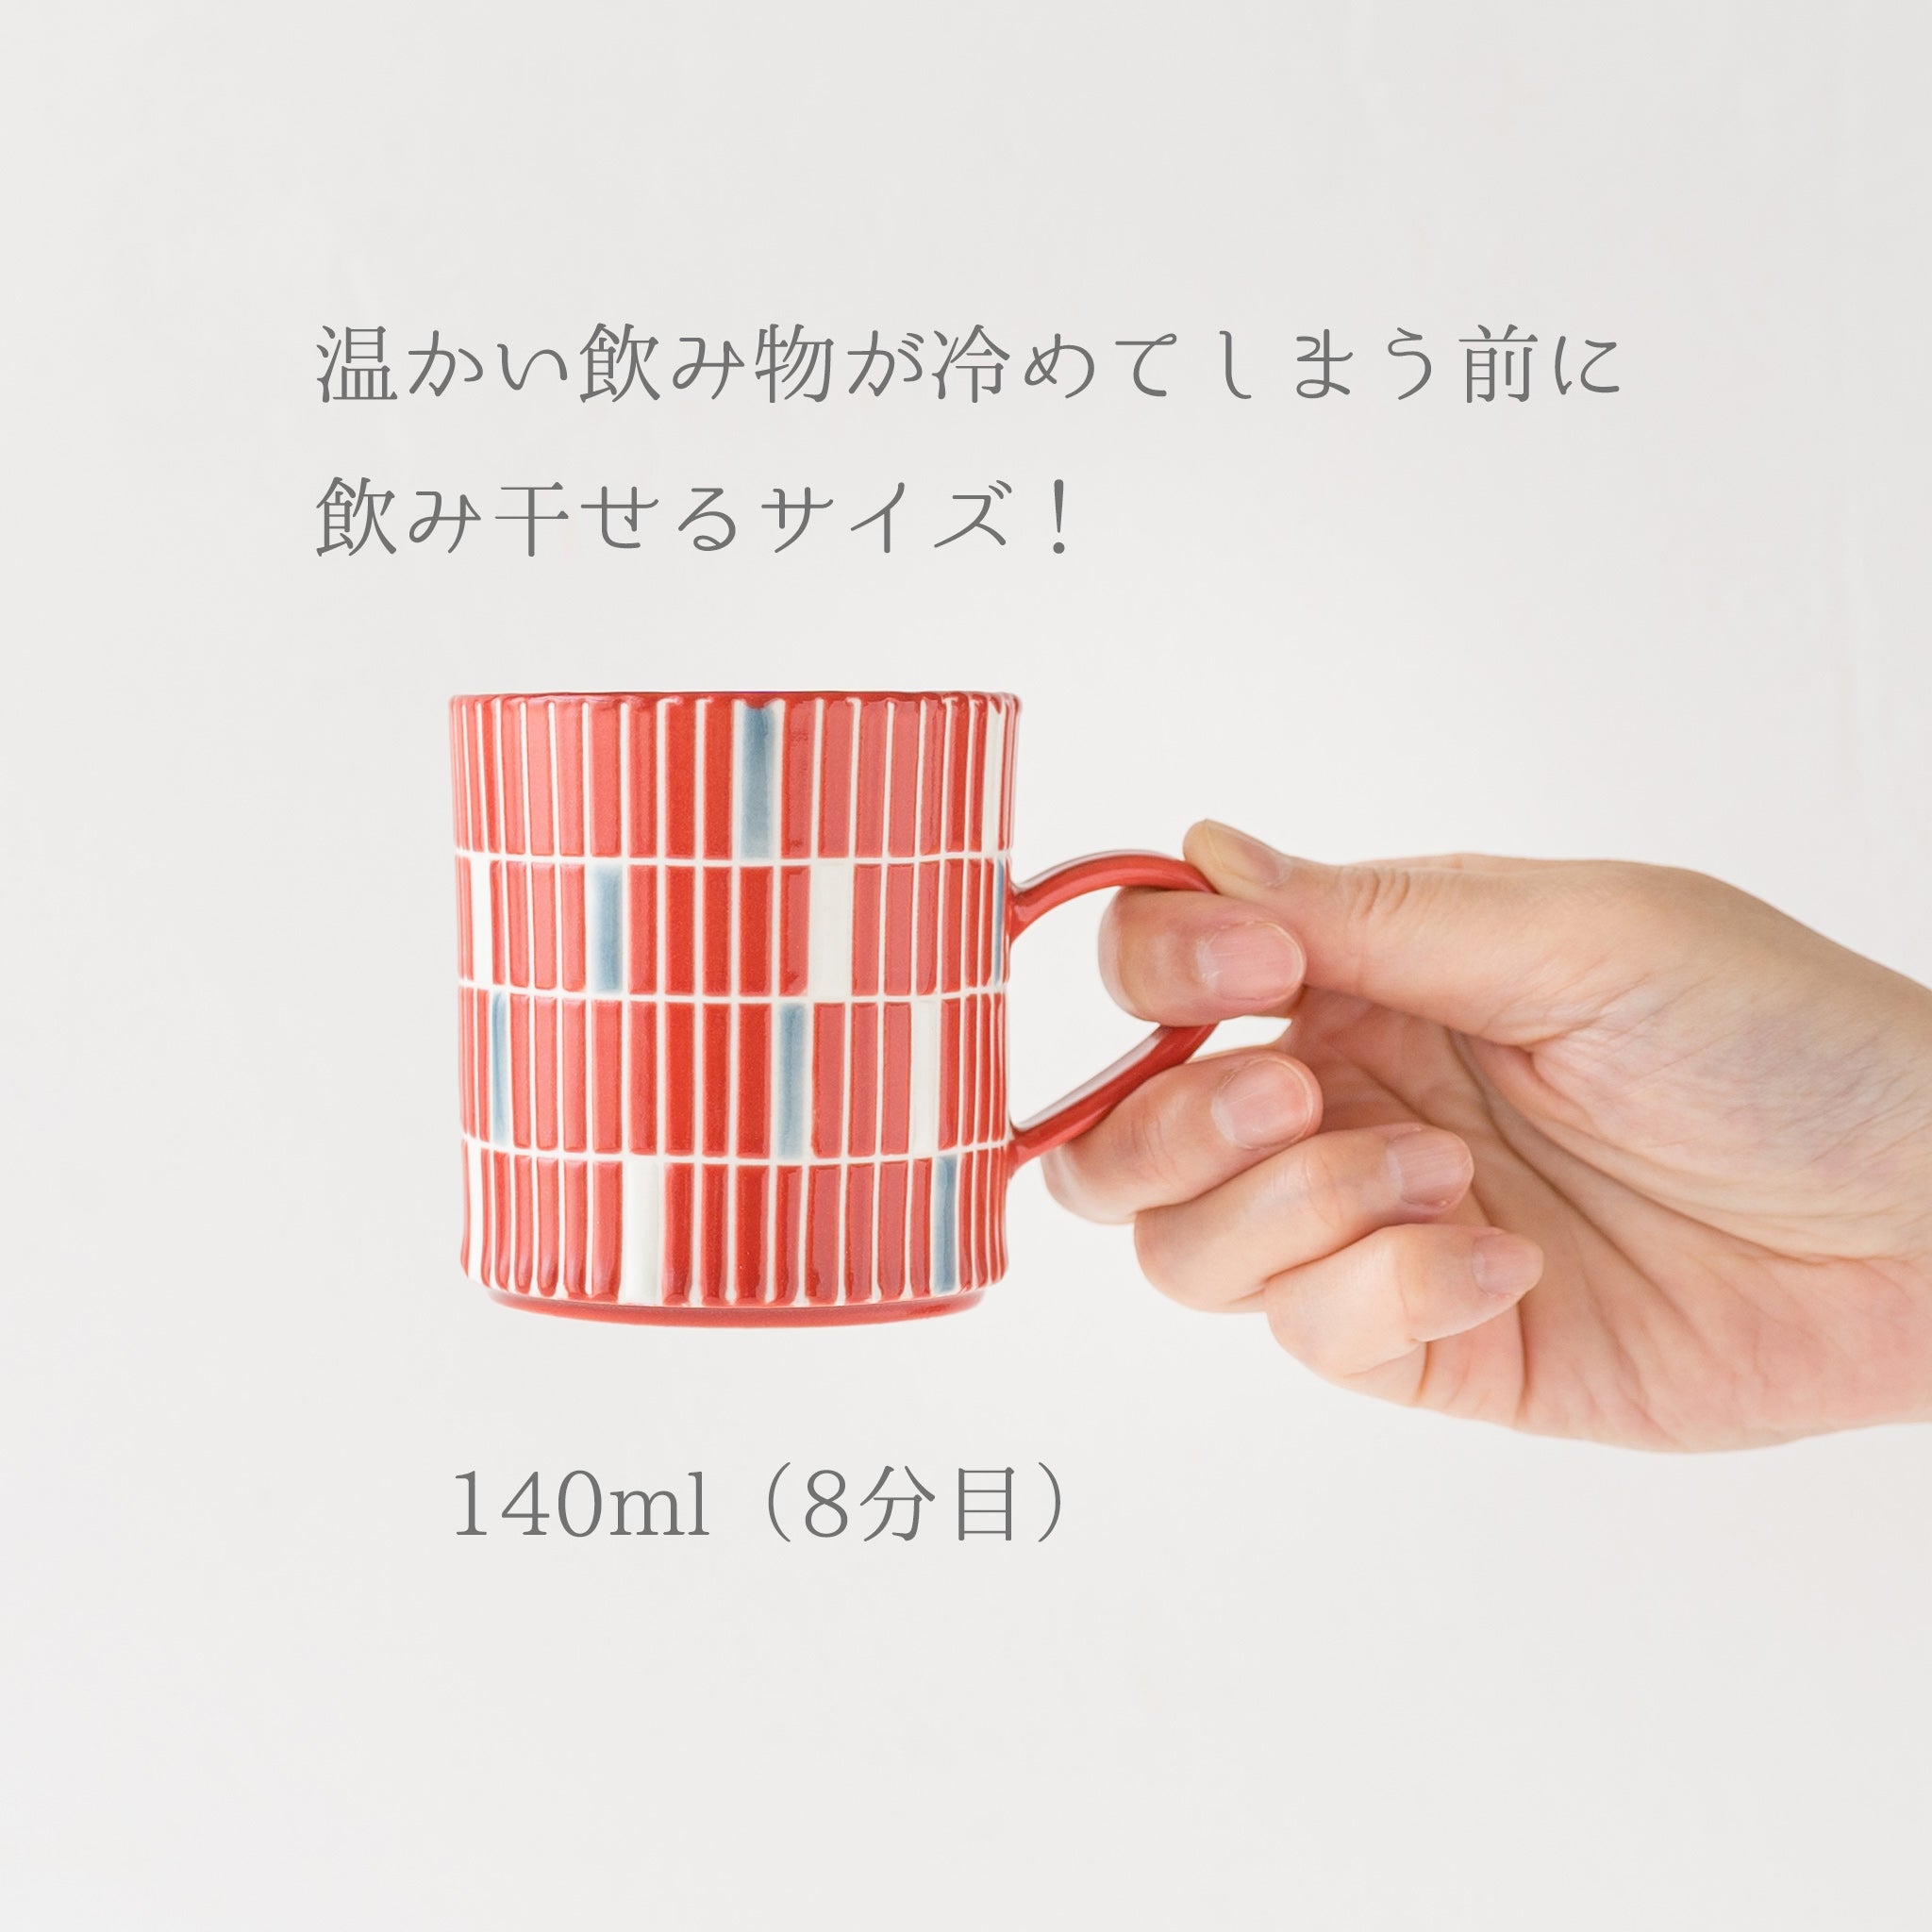 Yukari Nakagawa's mini-sized tile mug with a cute appearance